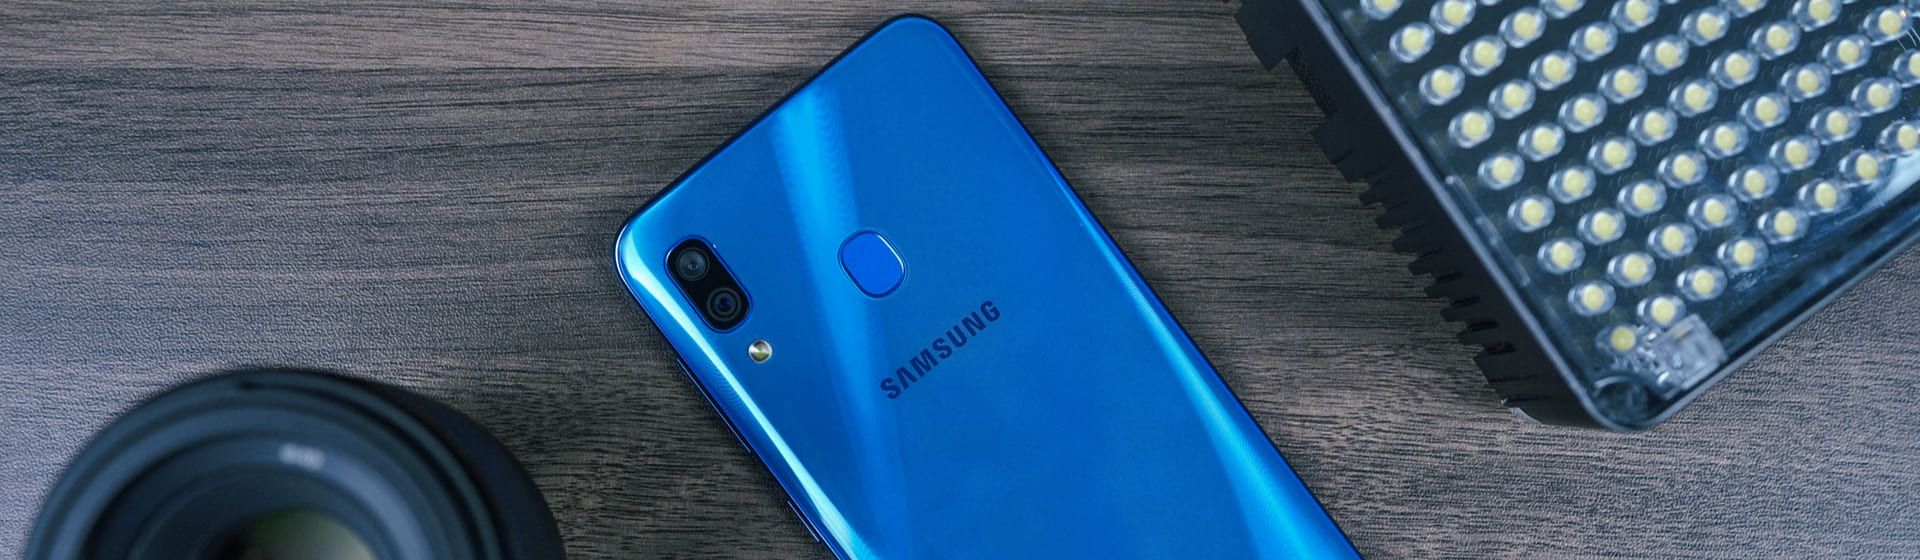 Samsung Galaxy A30 é bom? Confira a análise de ficha técnica